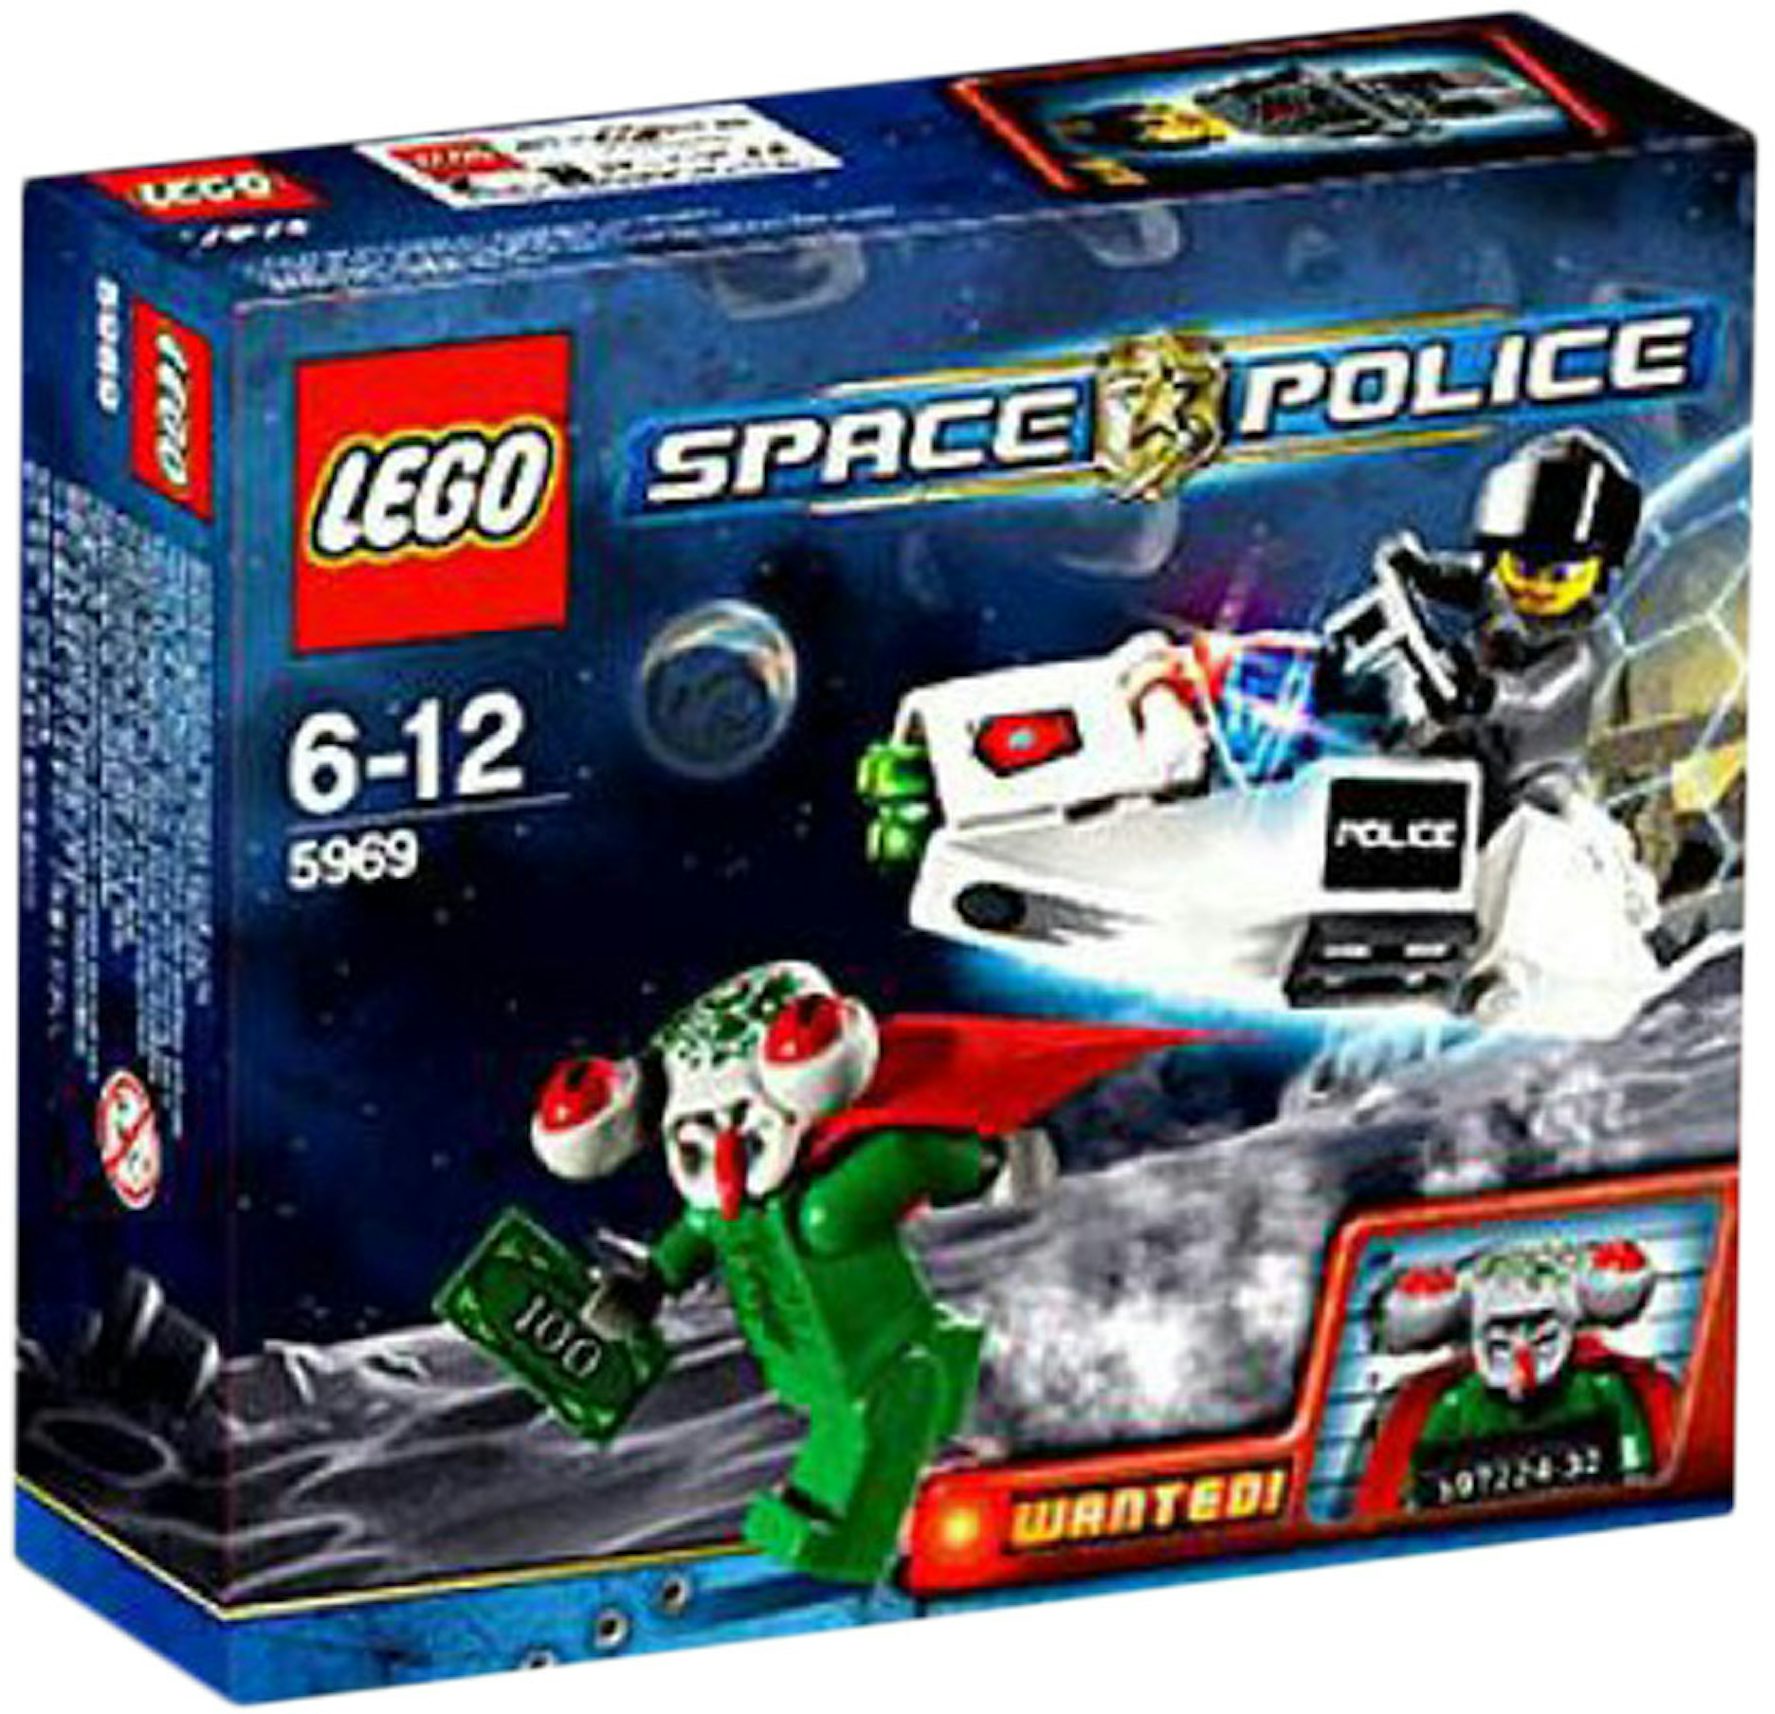 https://images.stockx.com/images/LEGO-Space-Police-Squidmans-Escape-Set-5969.jpg?fit=fill&bg=FFFFFF&w=1200&h=857&fm=jpg&auto=compress&dpr=2&trim=color&updated_at=1647885113&q=60